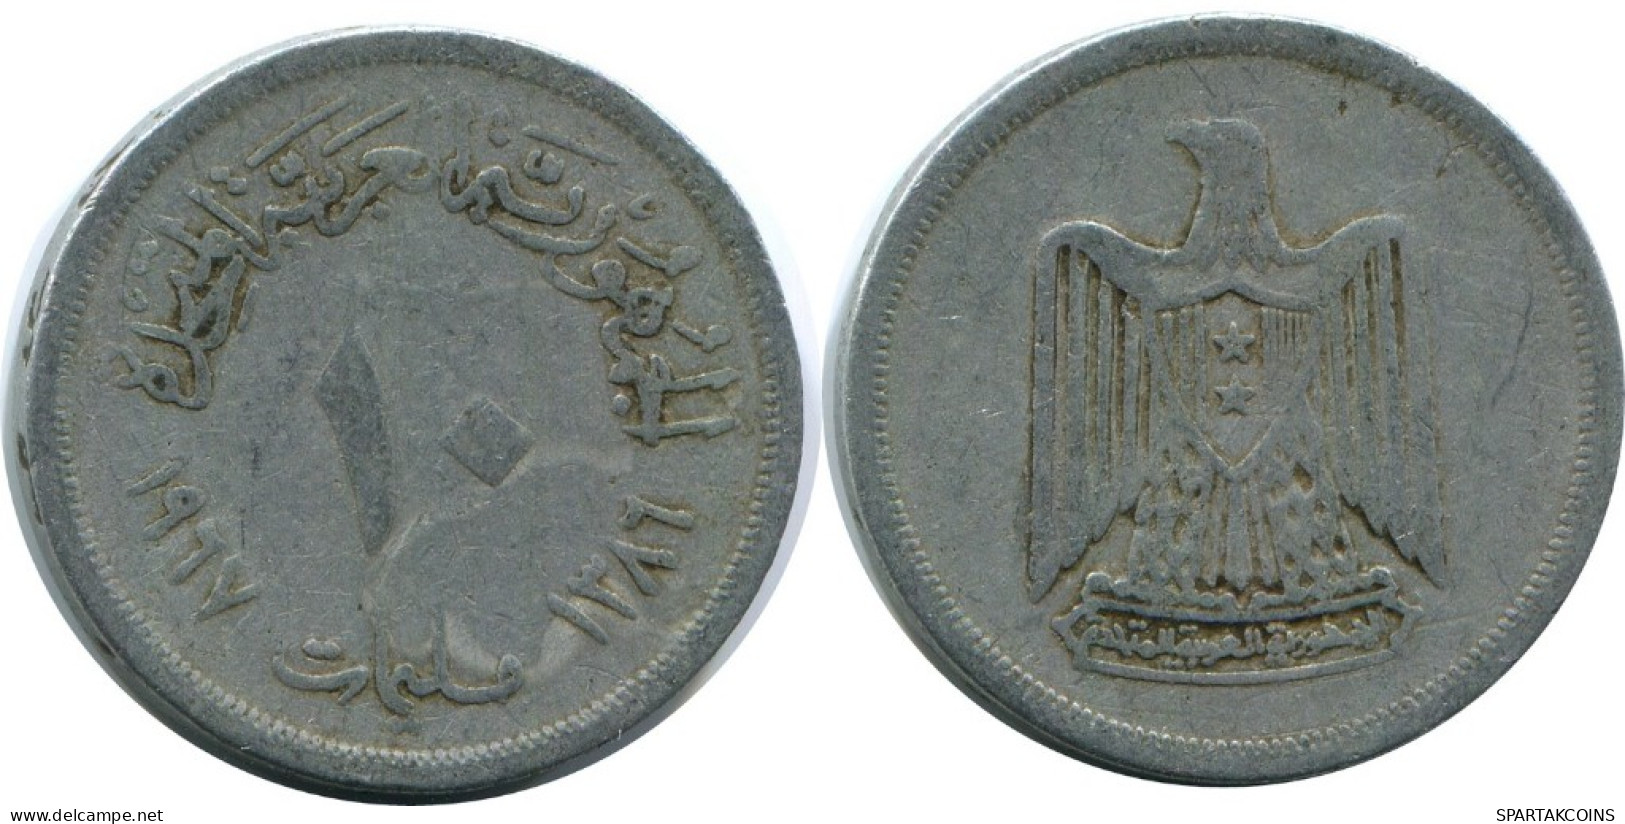 10 MILLIEMES 1967 EGYPT Islamic Coin #AK167.U.A - Egypt